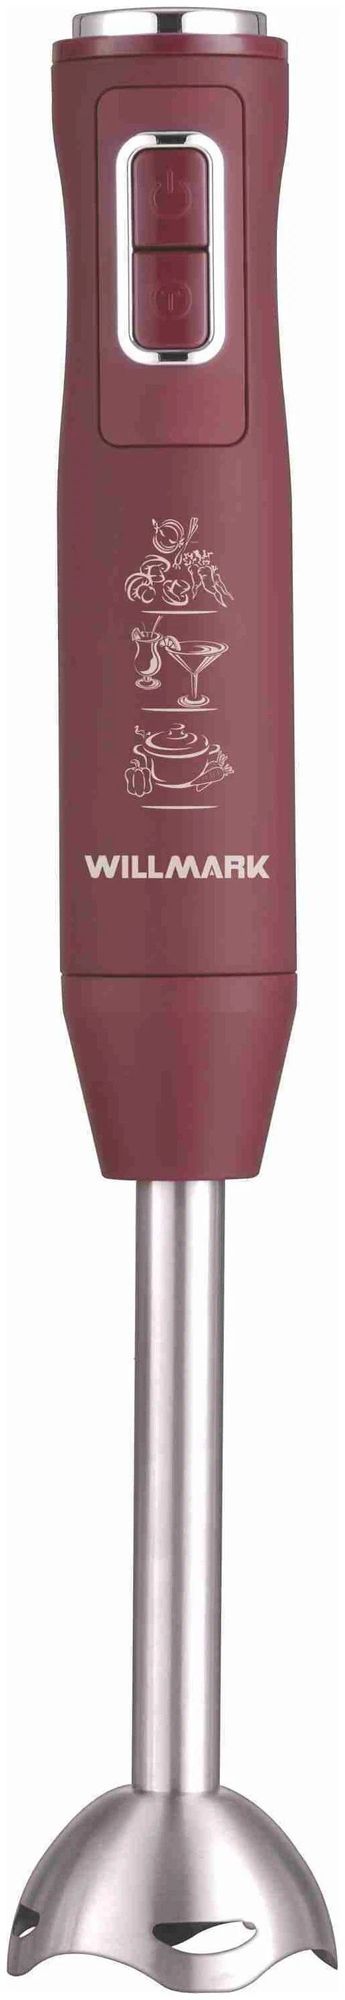 Блендер погружной Willmark WHB-1150PS